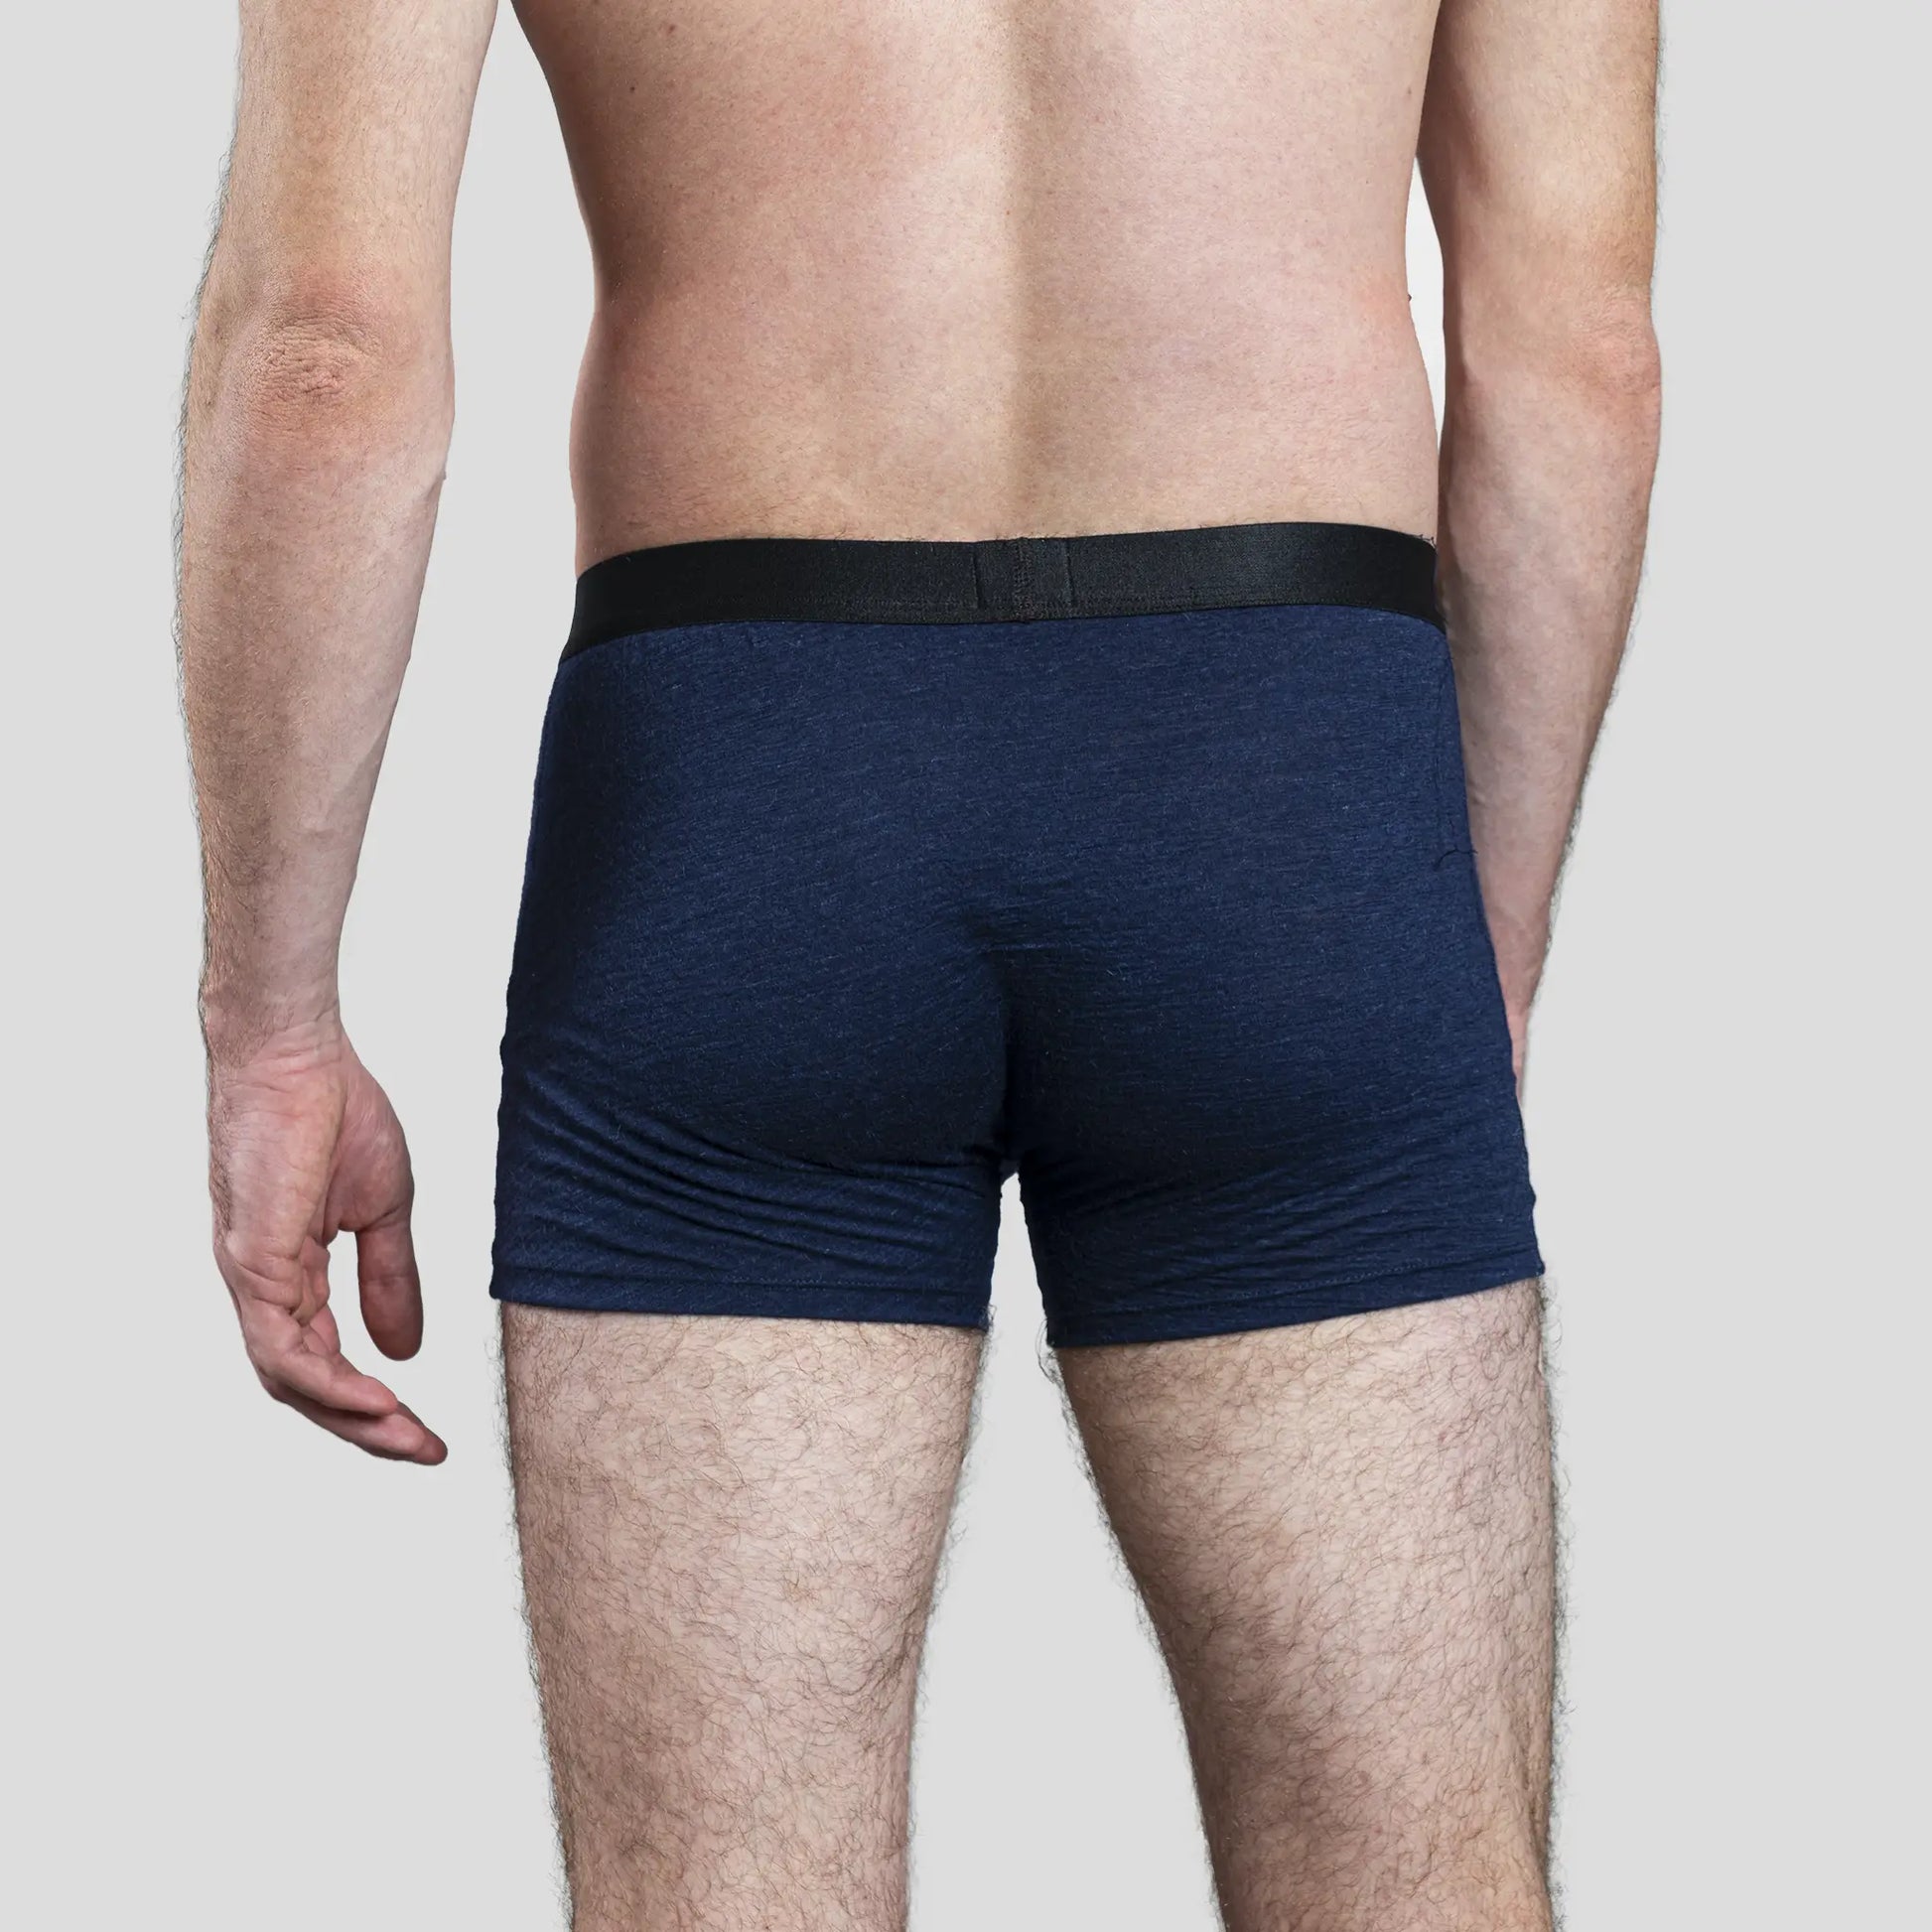 mens travel underwear boxer briefs color navy blue